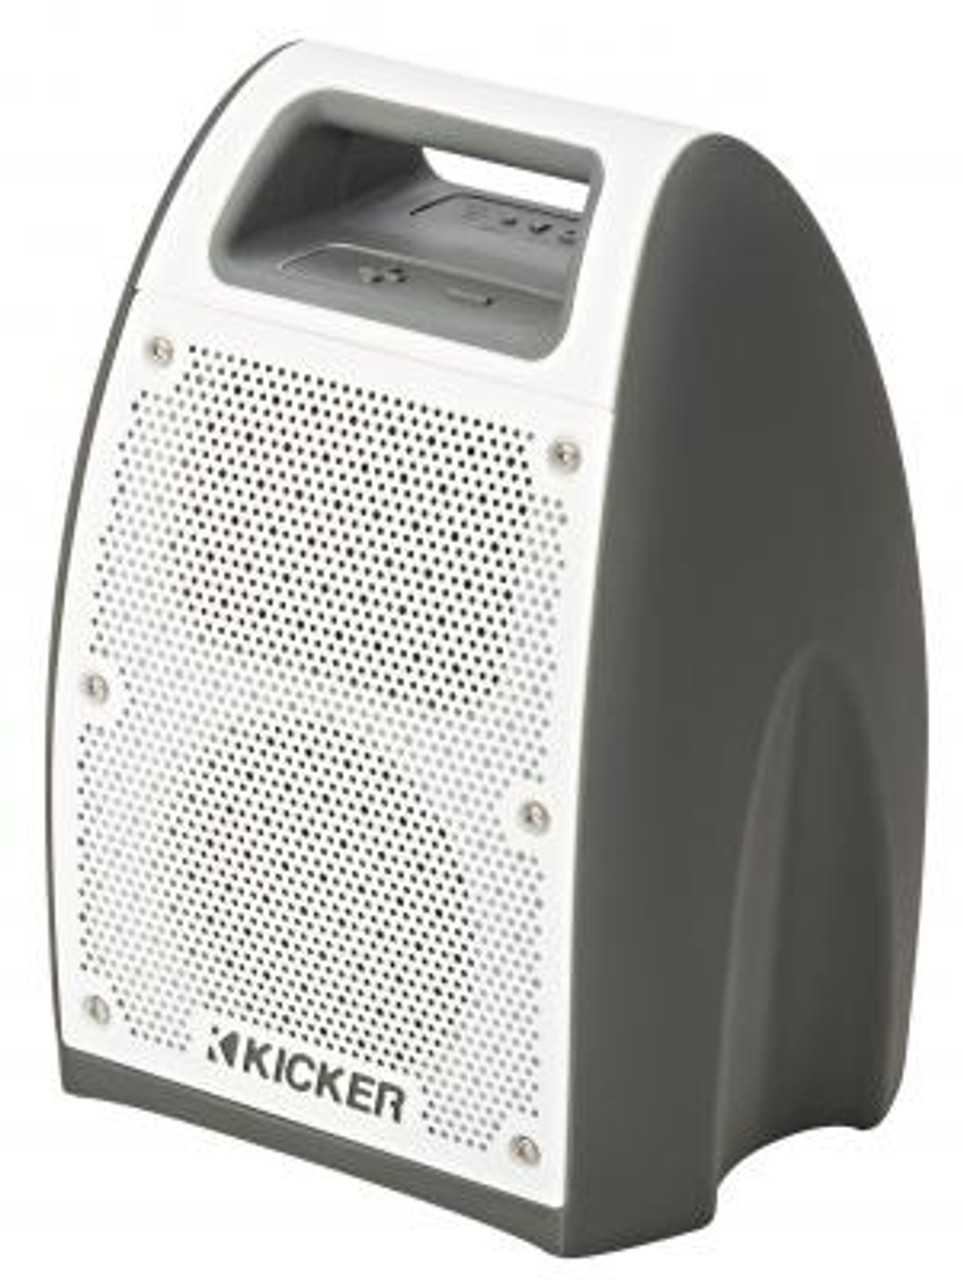 Kicker SA - This VW Polo sports a full Kicker sound system